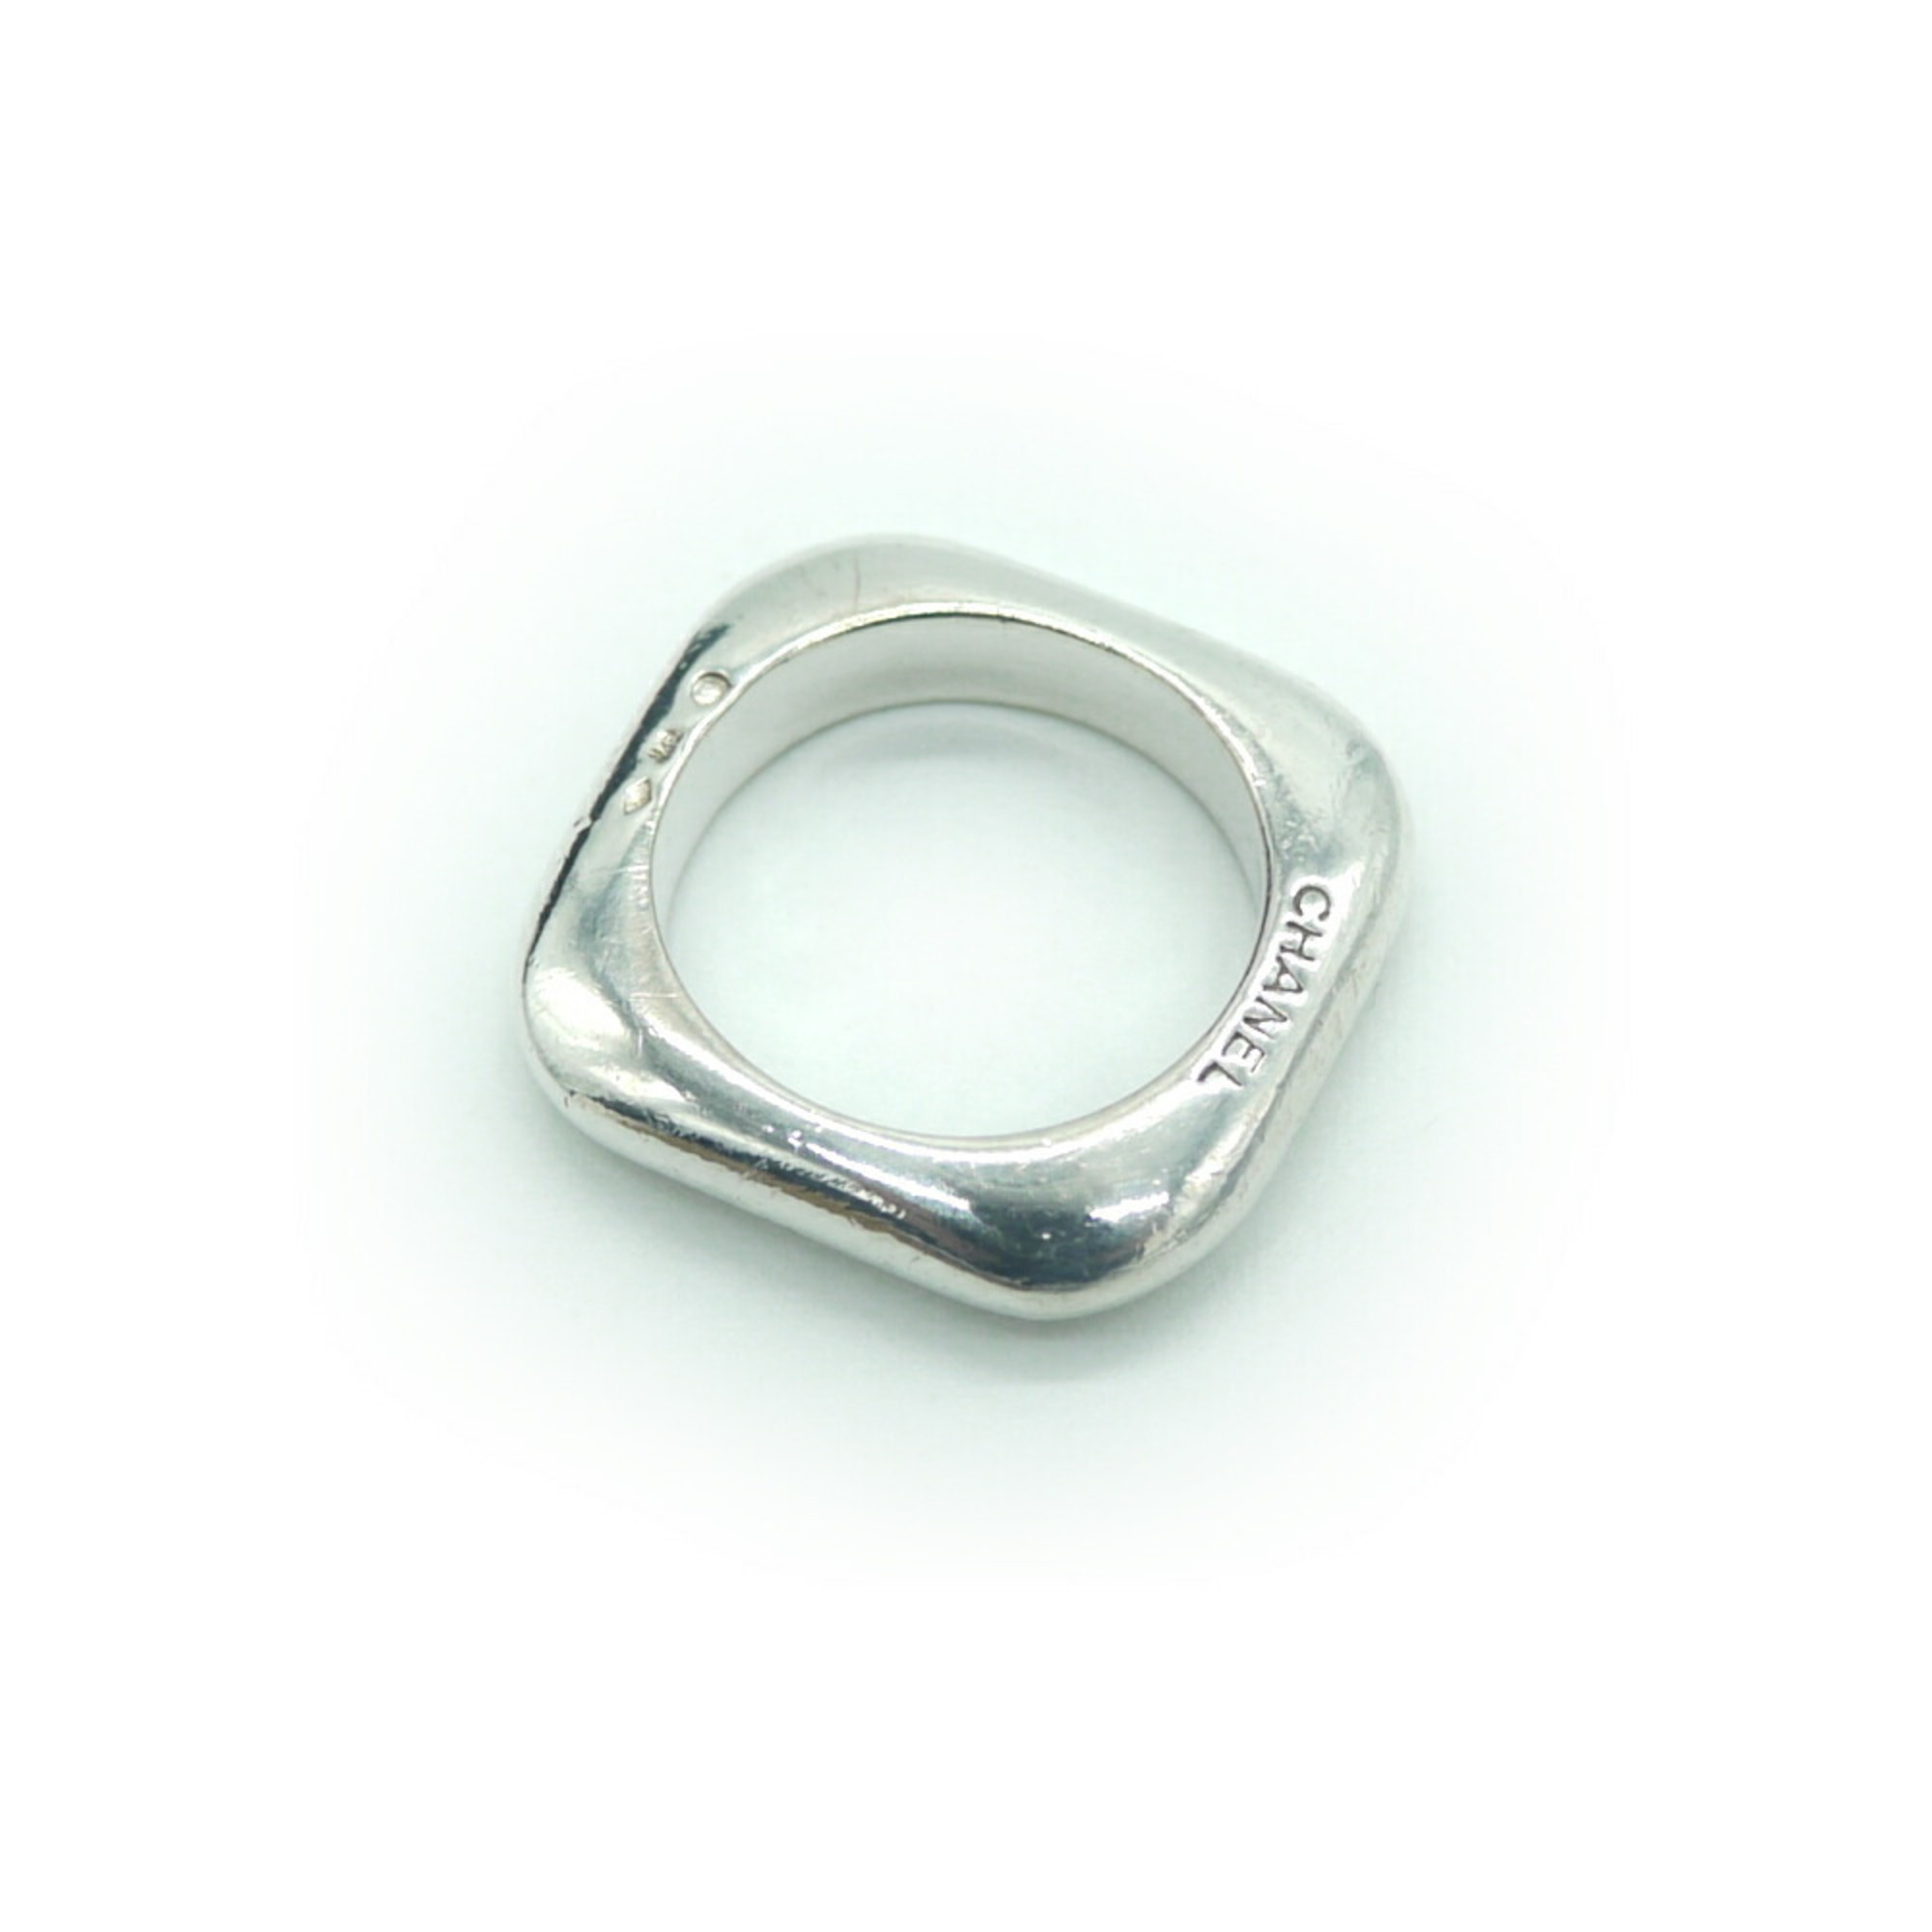 CHANEL Silver 925 Square Ring No. 16